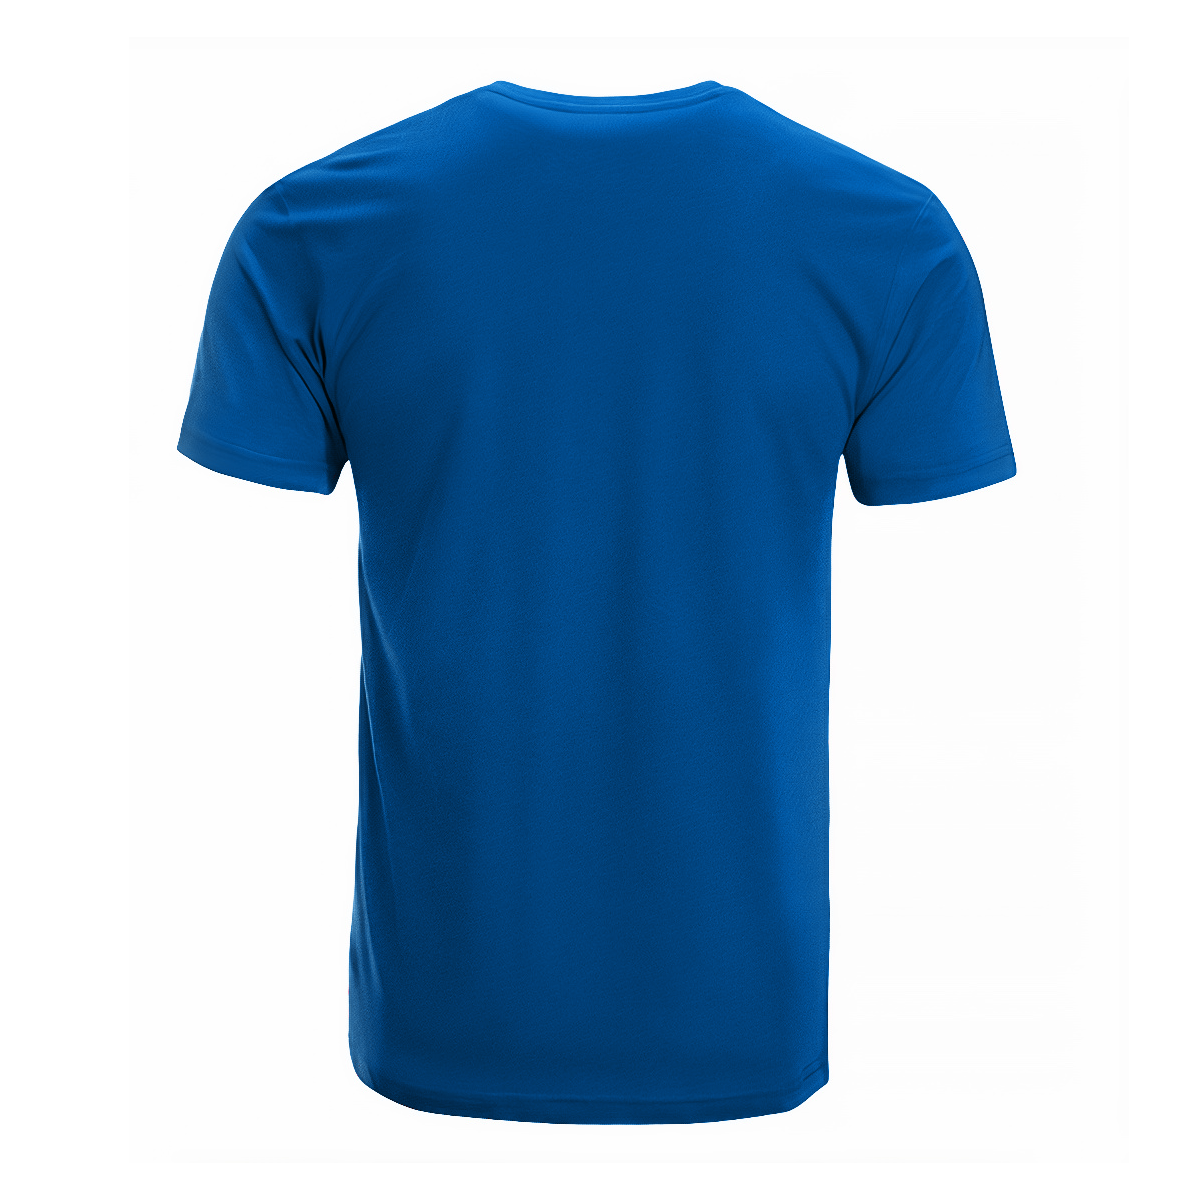 Hogg (or Hog) Tartan Crest T-shirt - I'm not yelling style